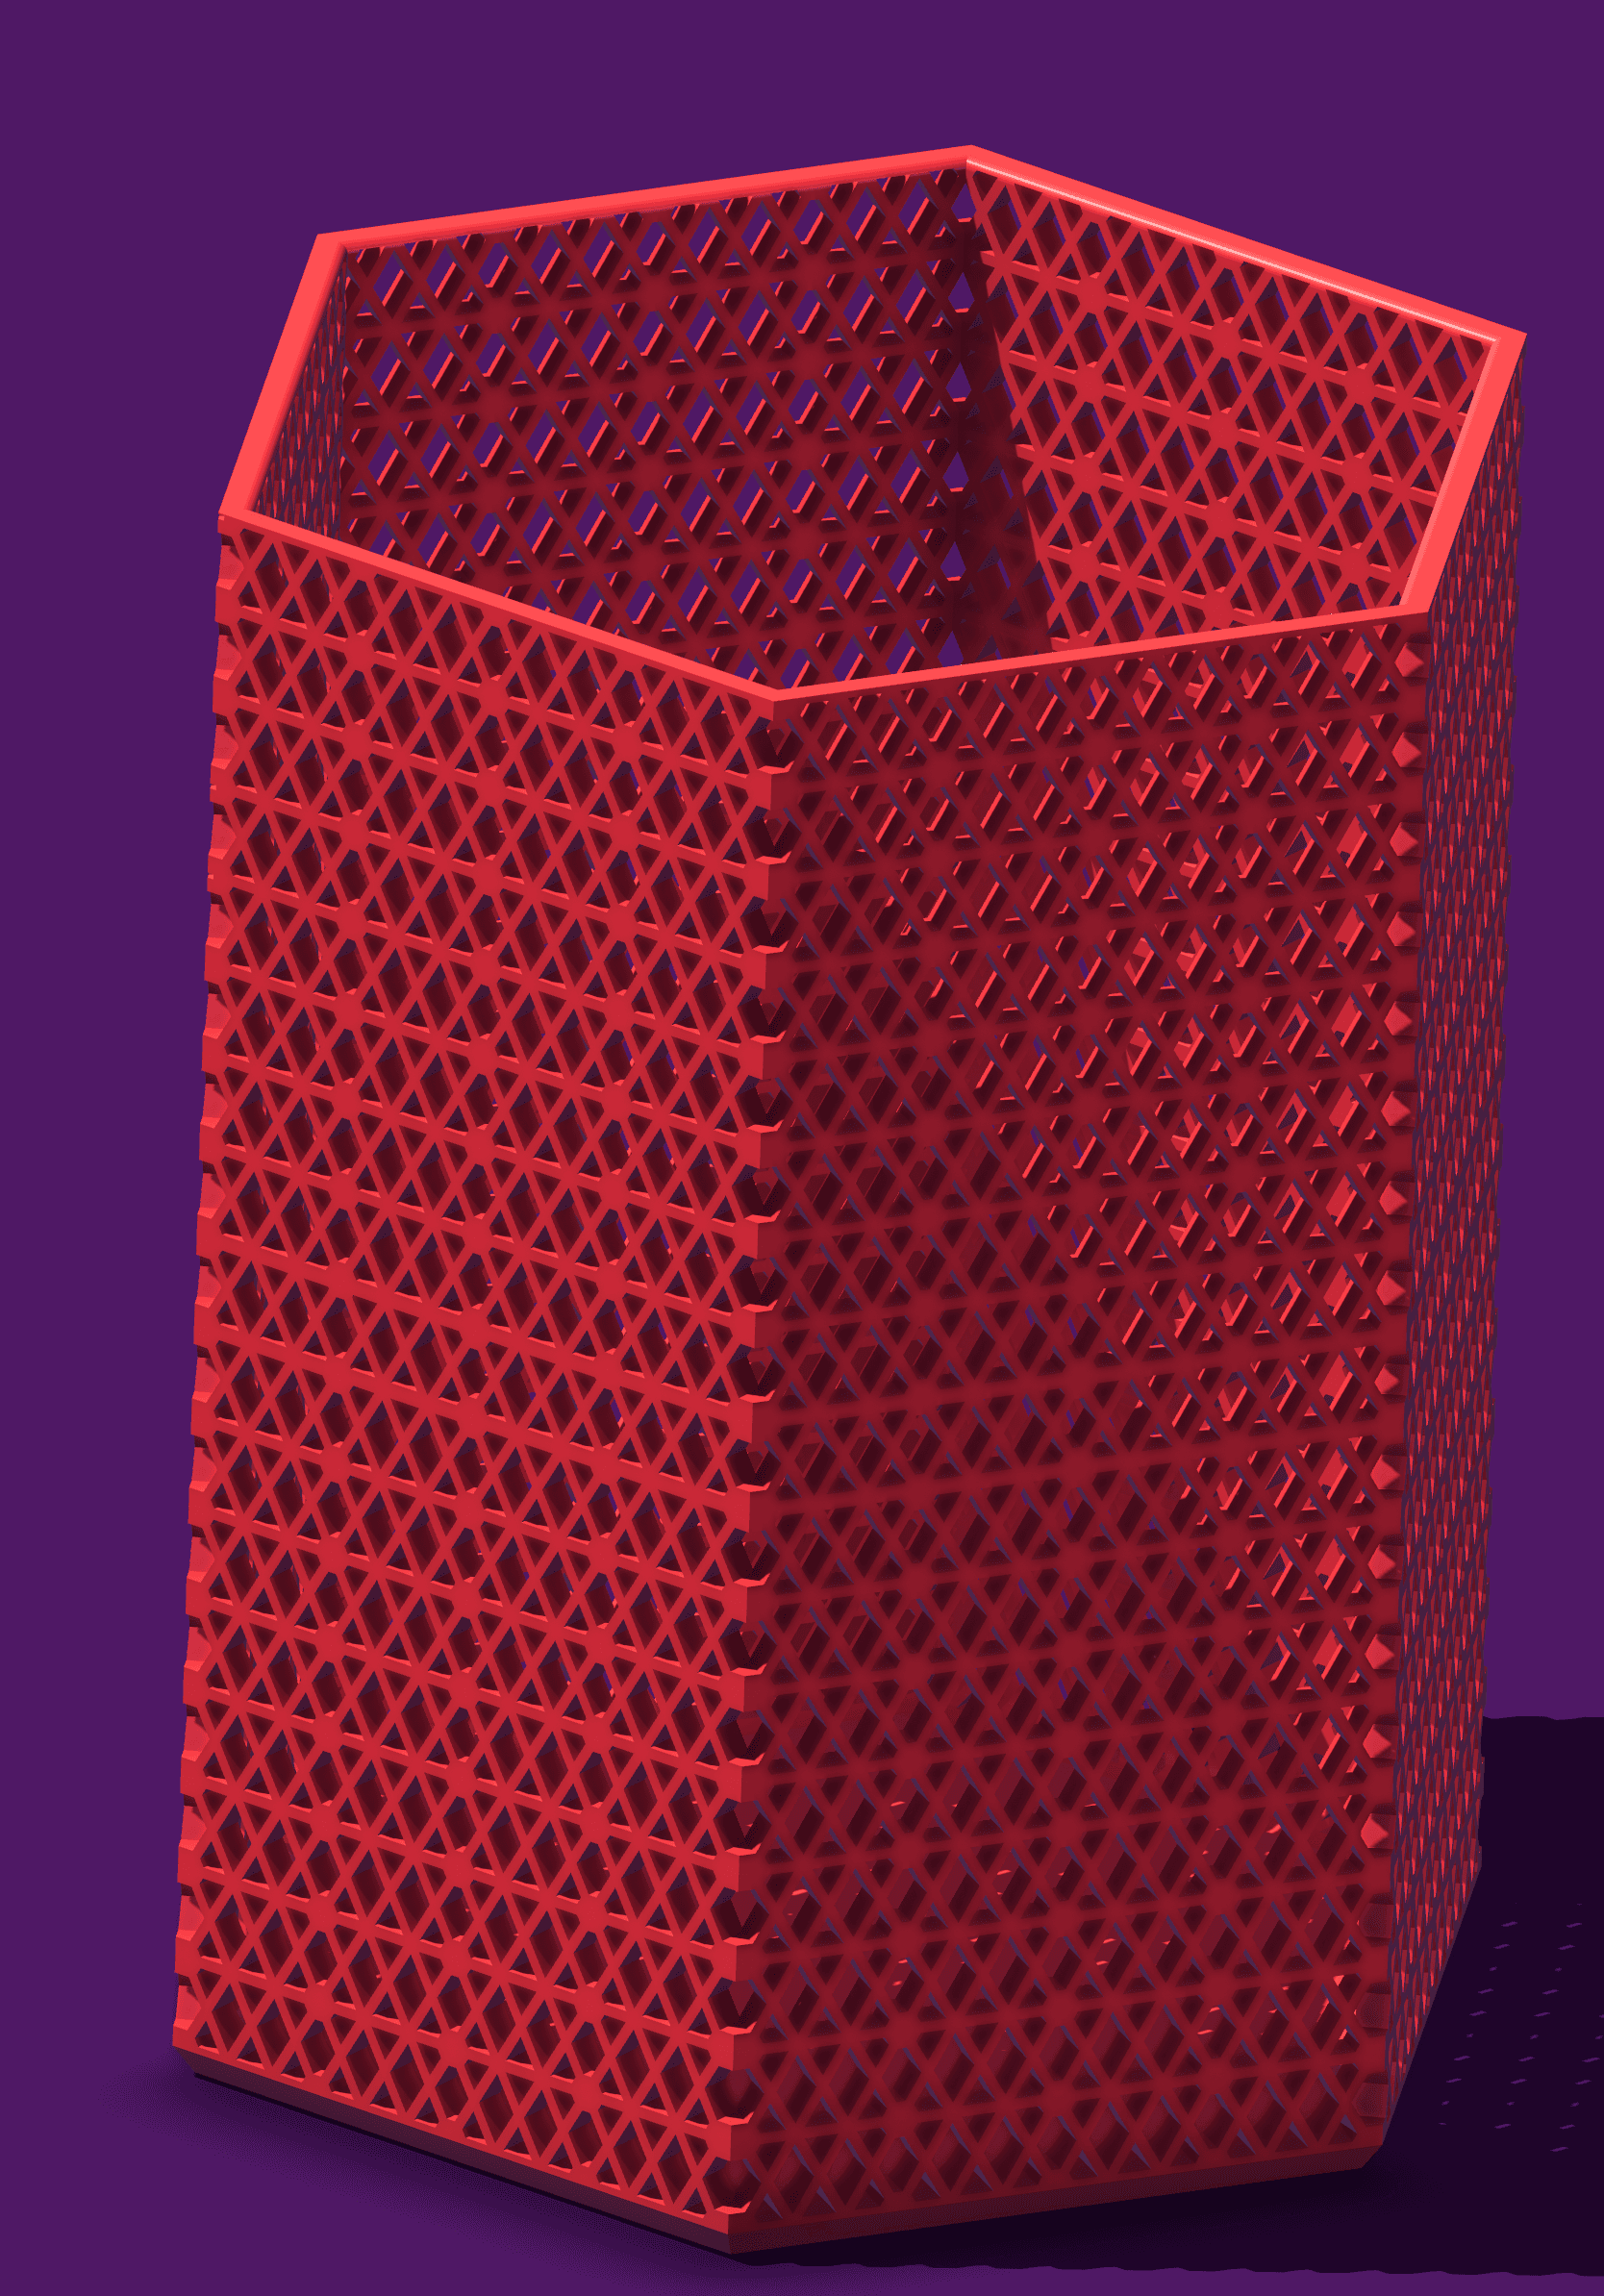 lattice vasepen store.stl 3d model